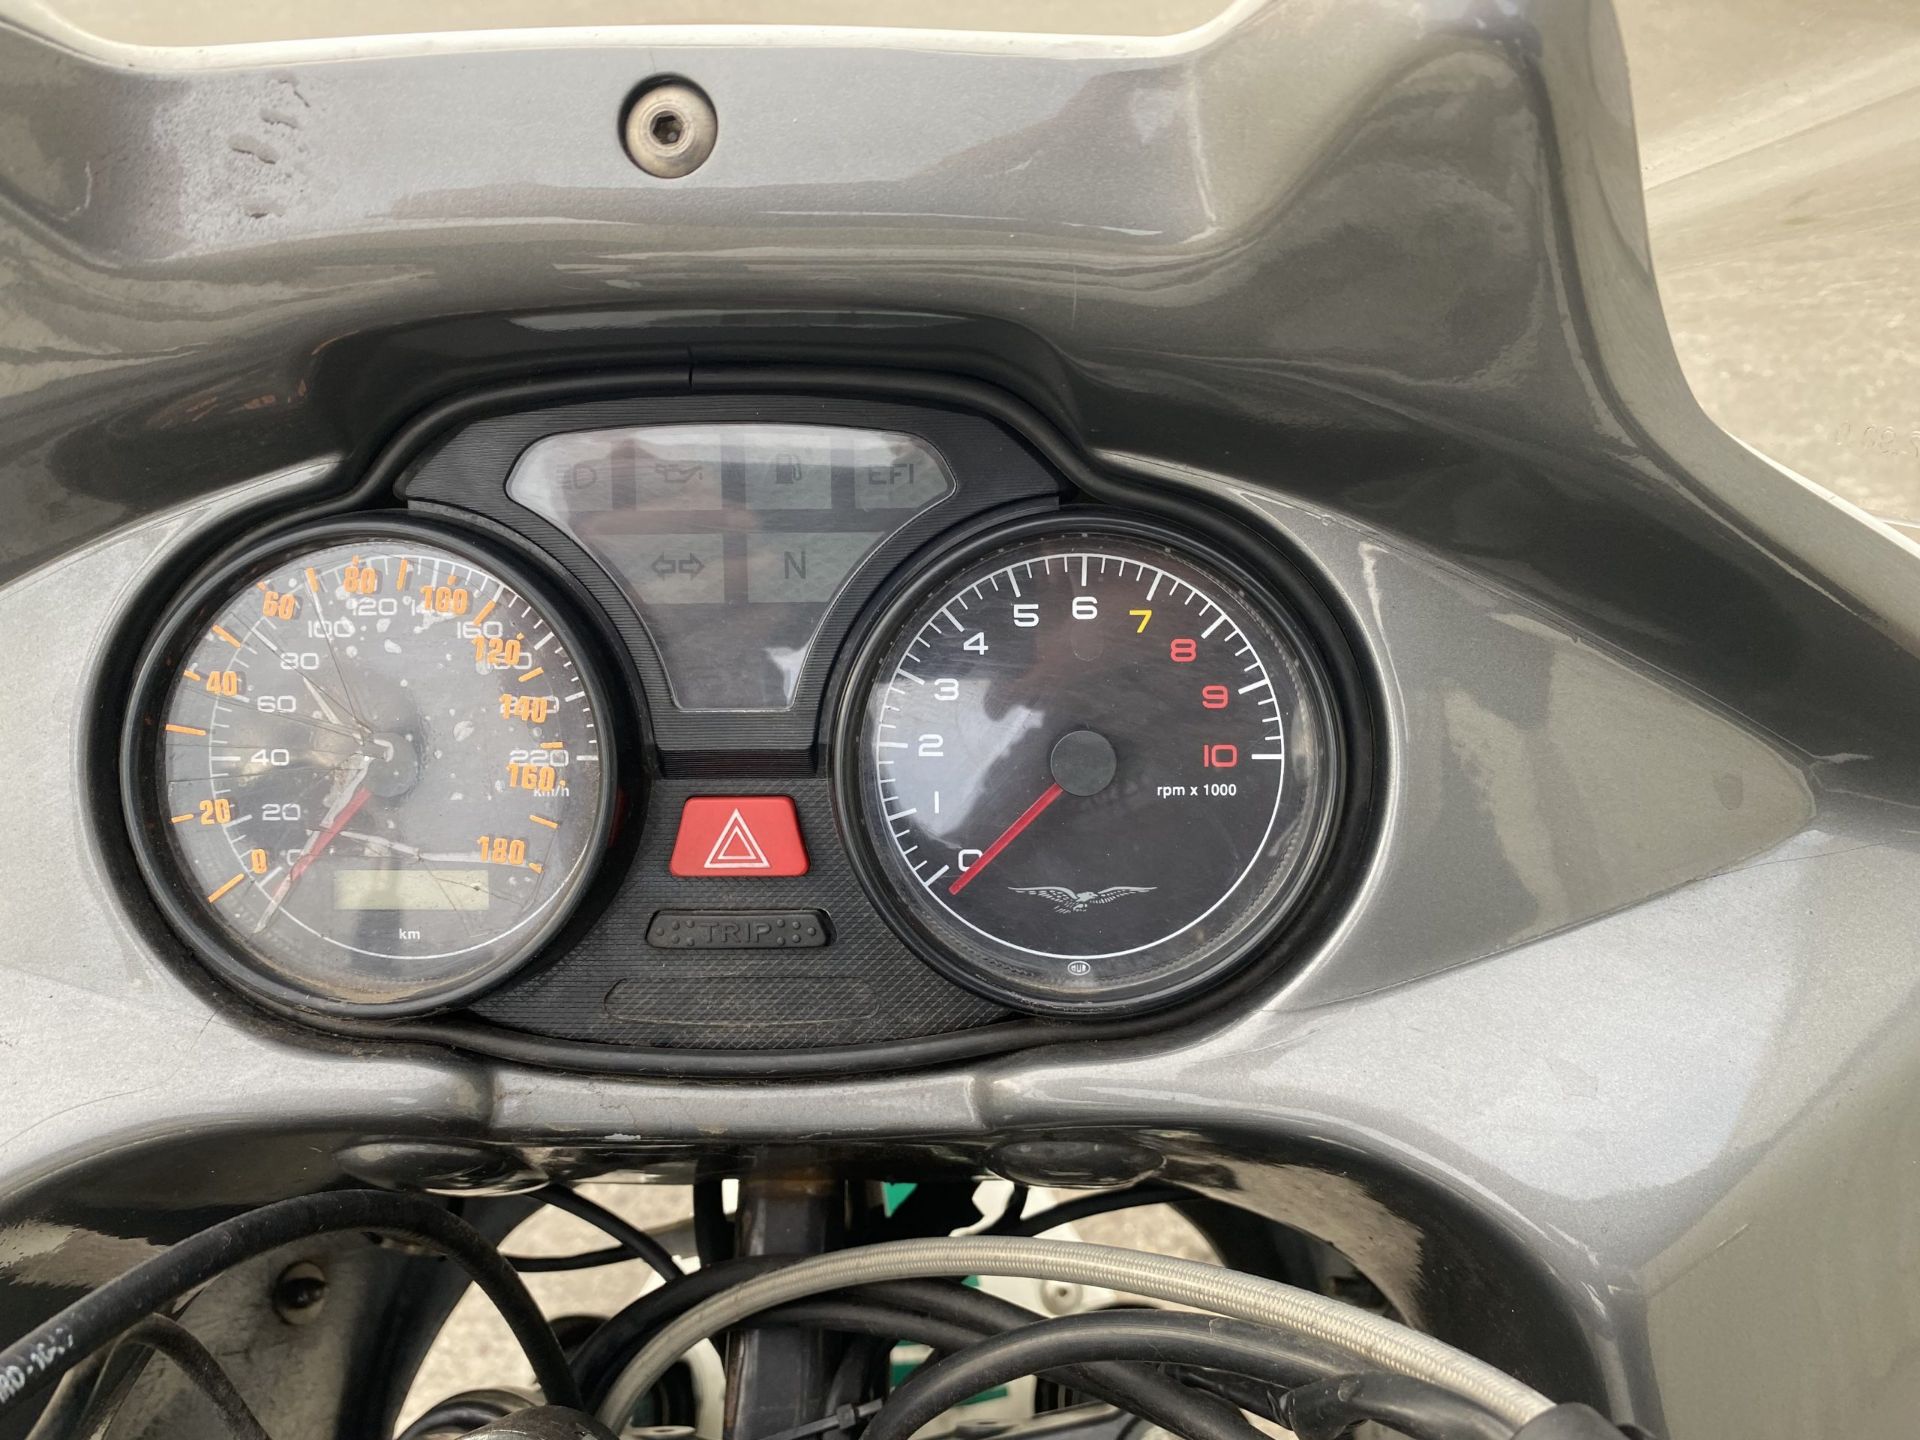 Moto Guzzi Breva 750 - Image 27 of 28